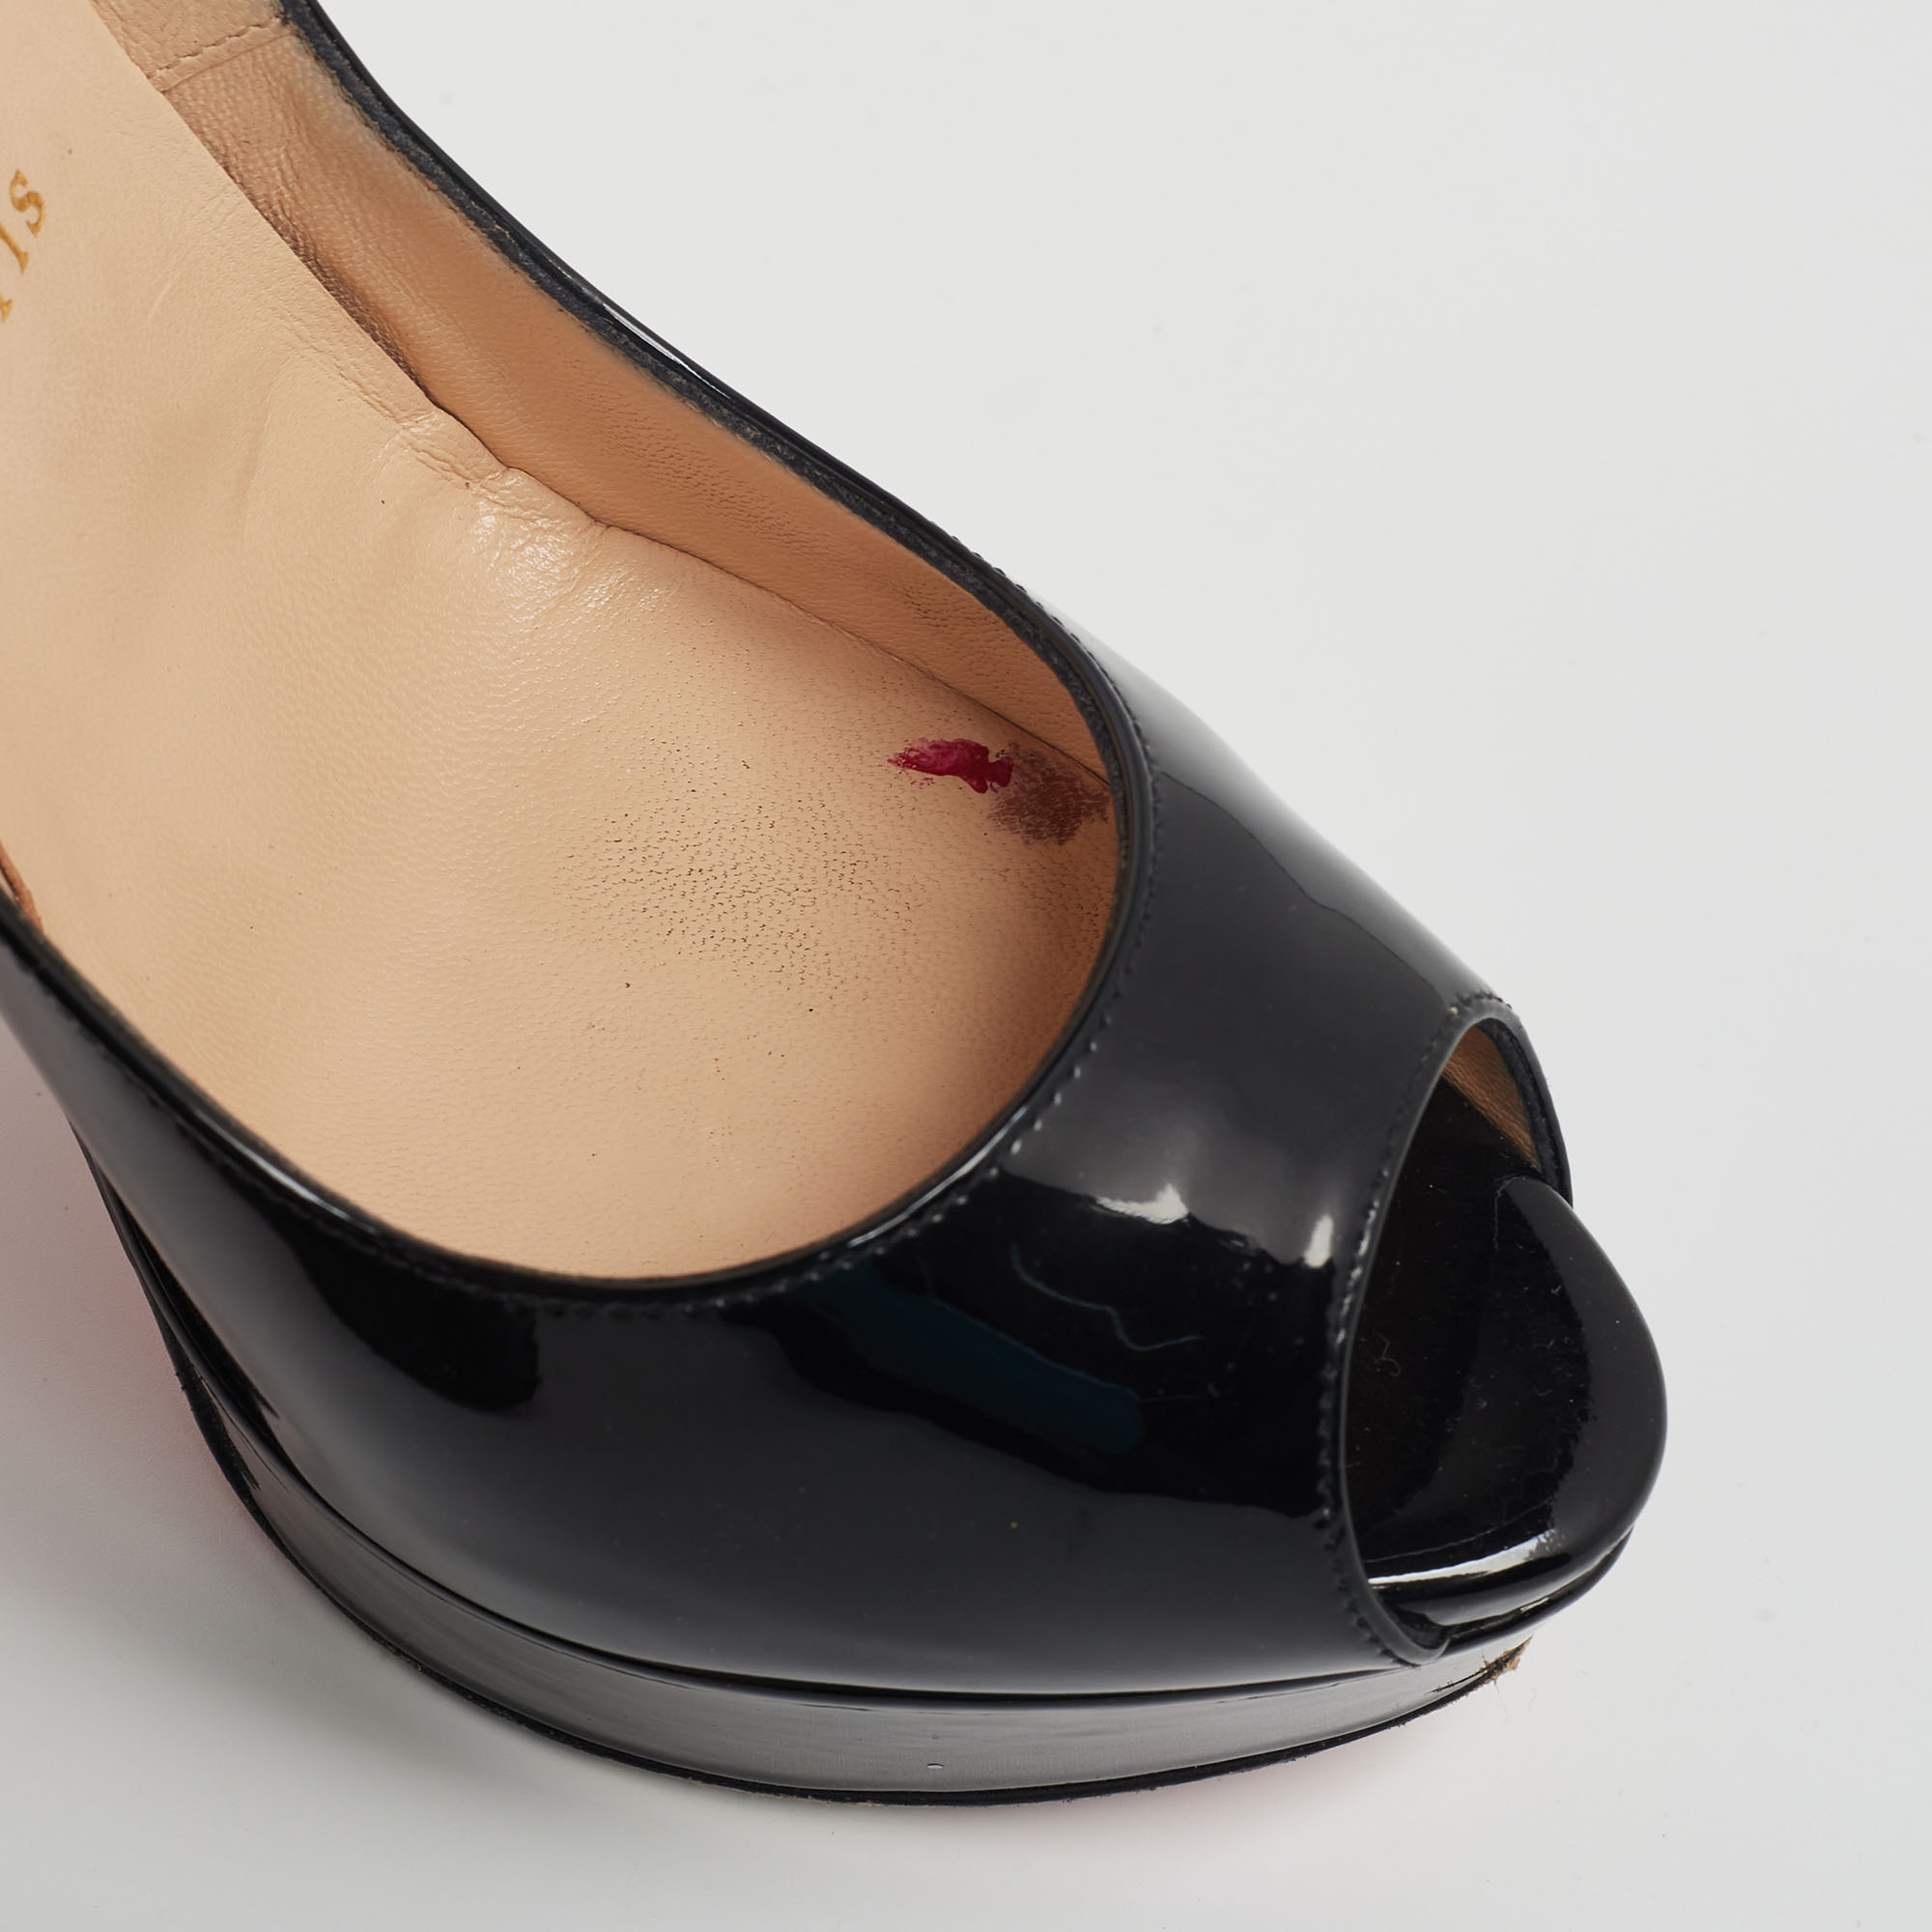 Christian Louboutin Black Patent Leather Lady Peep-Toe Pumps Size 38